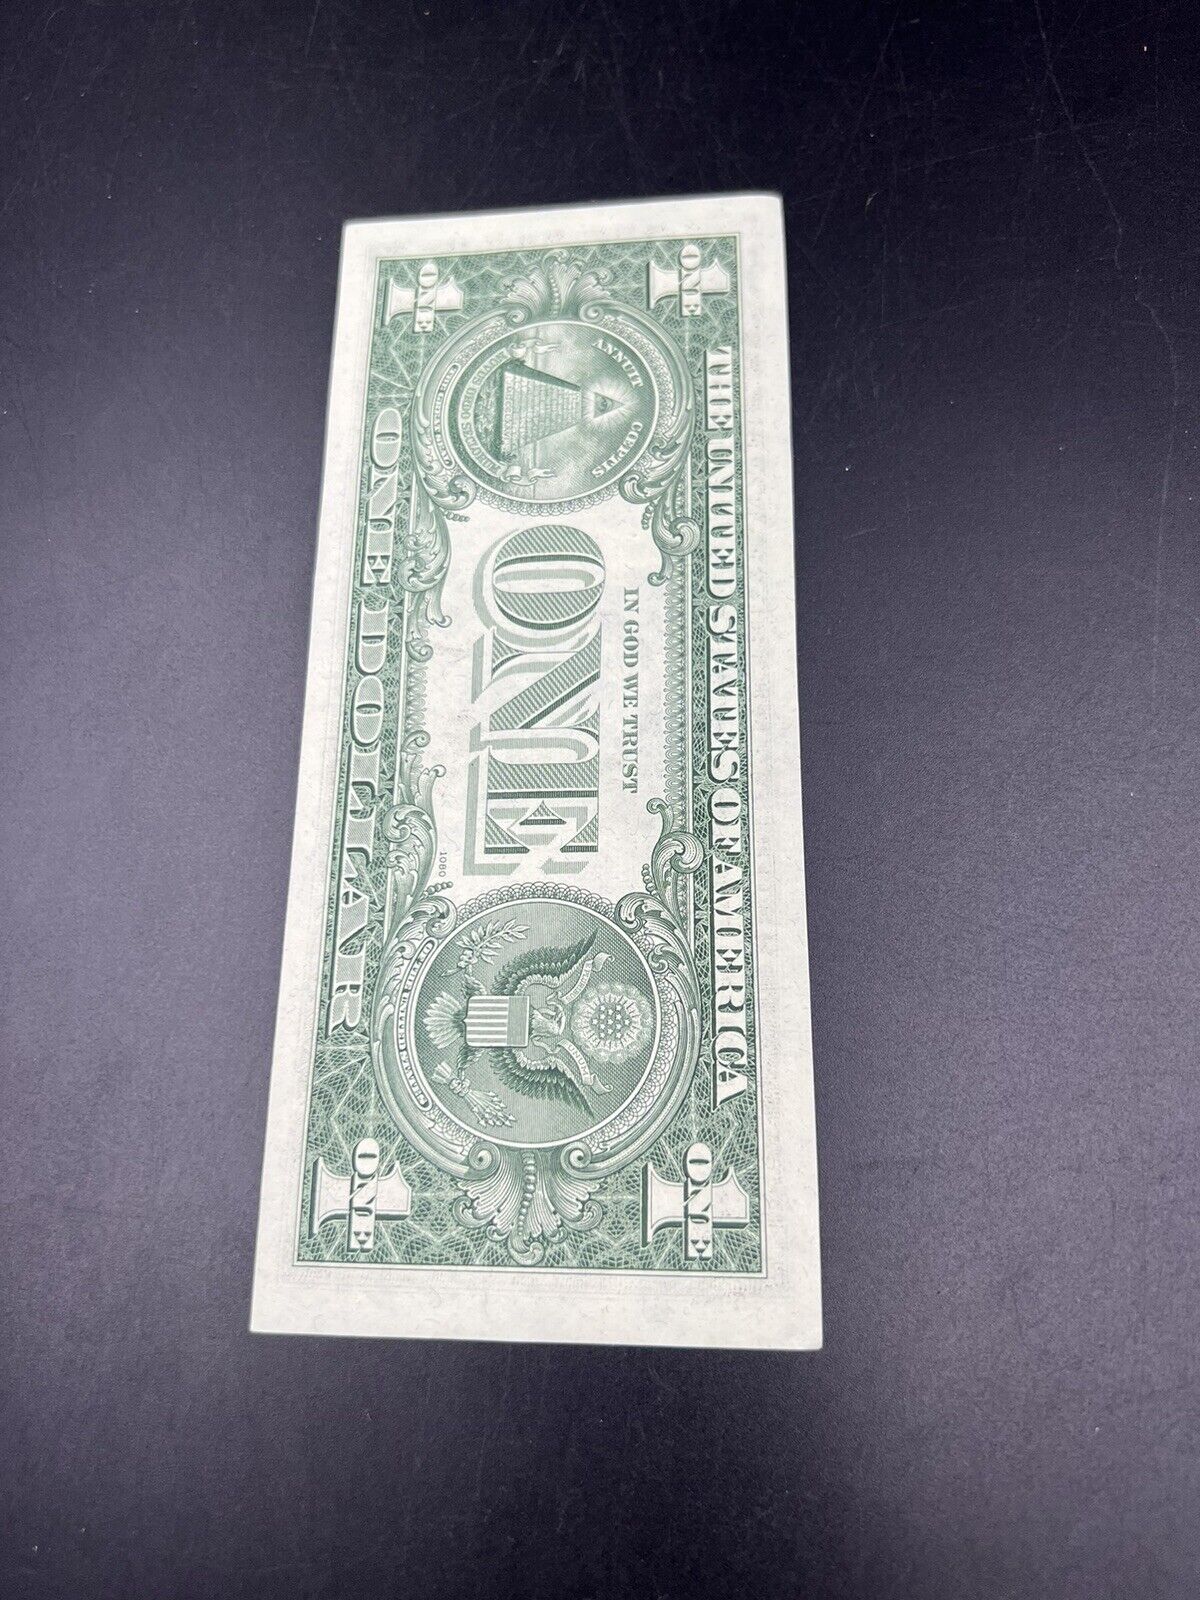 1963 B $1 Barr Signature Federal Reserve Note FRN CH UNC Kansas City District